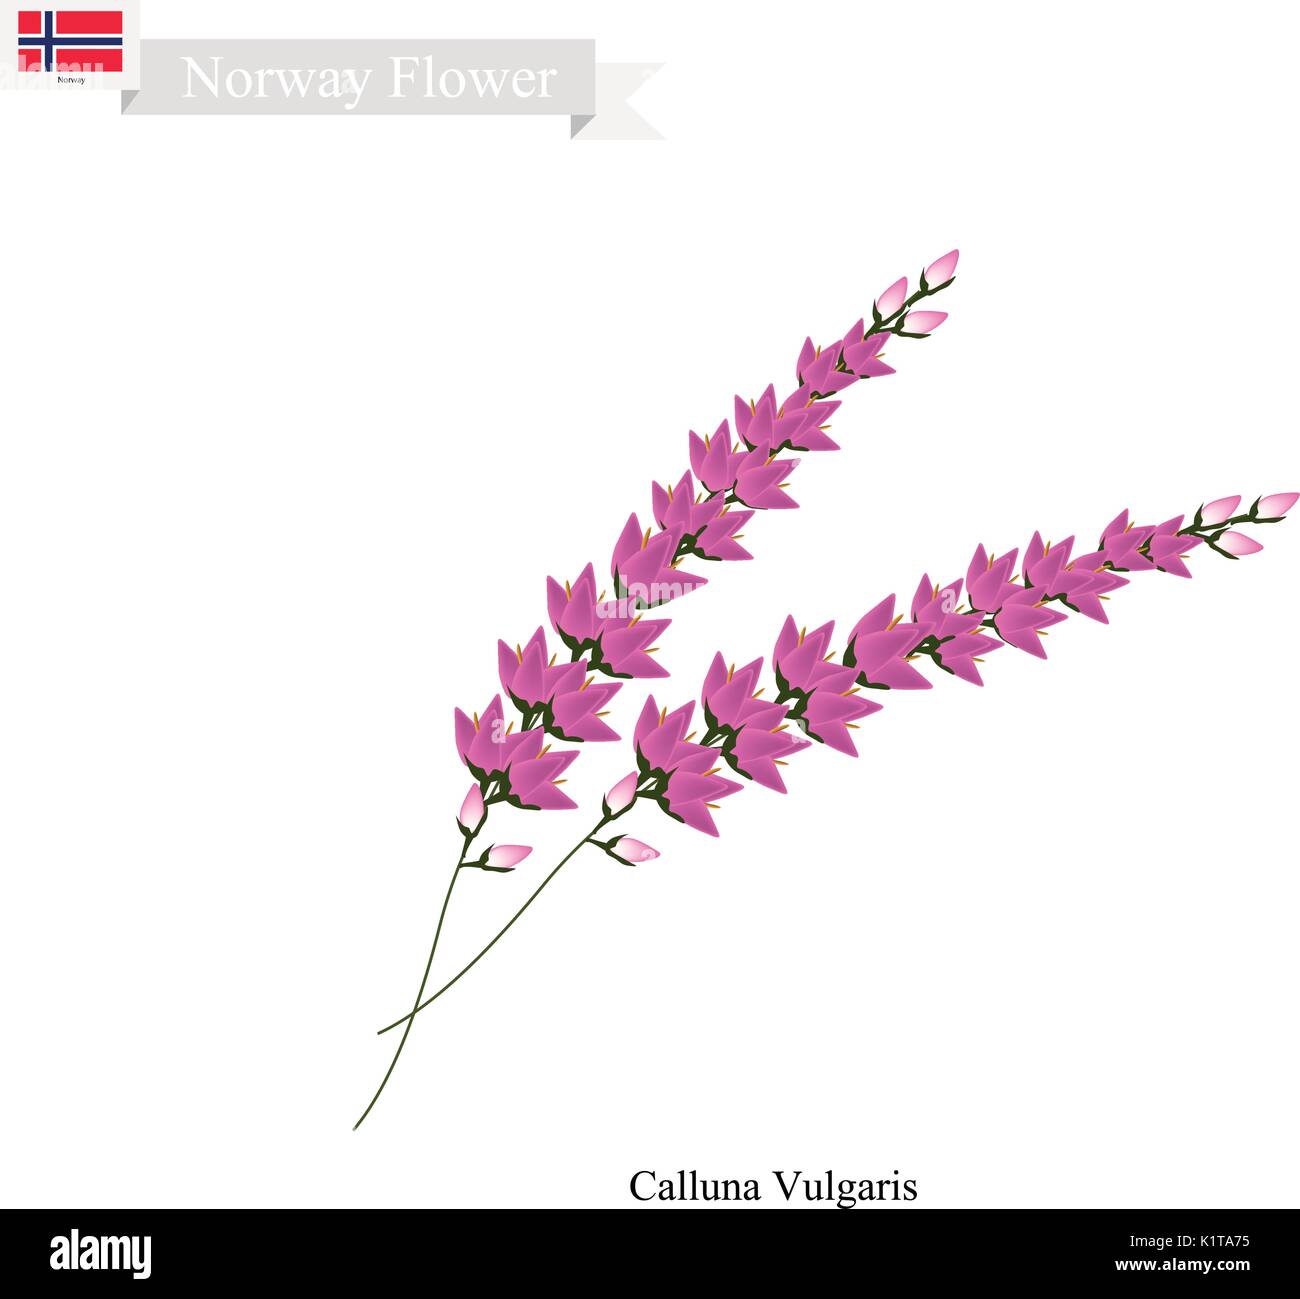 Norwegian Flower, Illustration of Calluna Vulgaris, Purple Scotch Heather or Ling. The Native Flower of Norway. Stock Vector